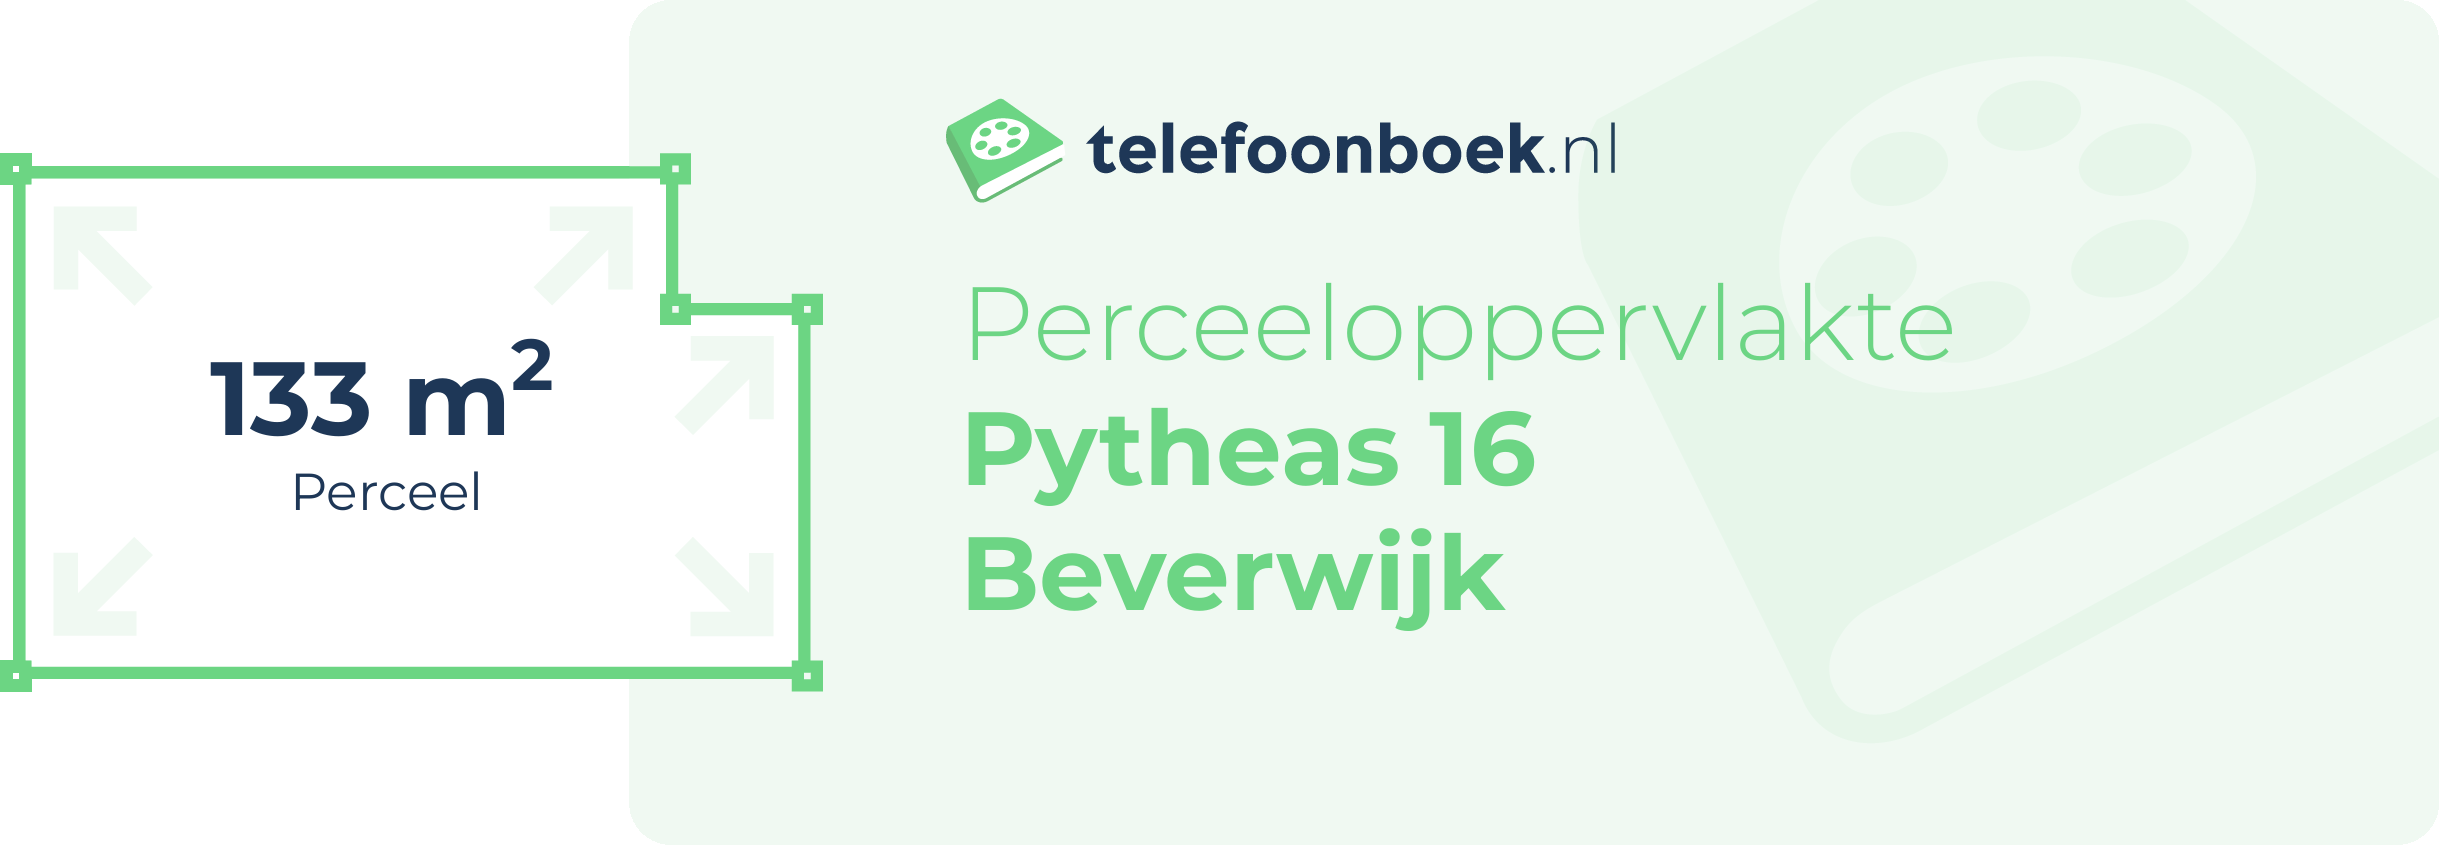 Perceeloppervlakte Pytheas 16 Beverwijk